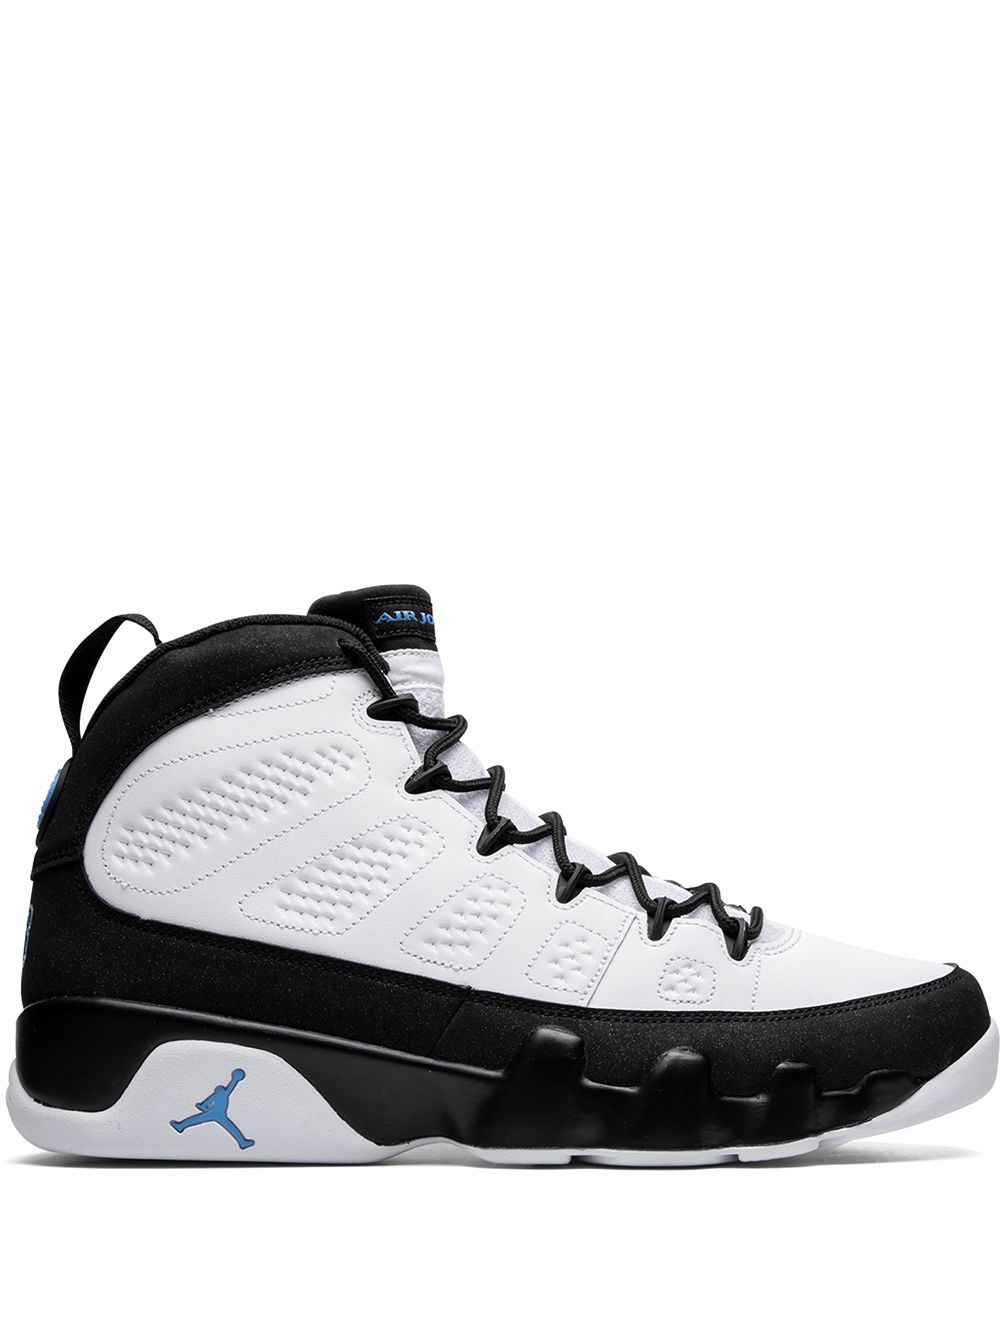 Jordan Air Jordan 9 Retro "University Blue" sneakers - White